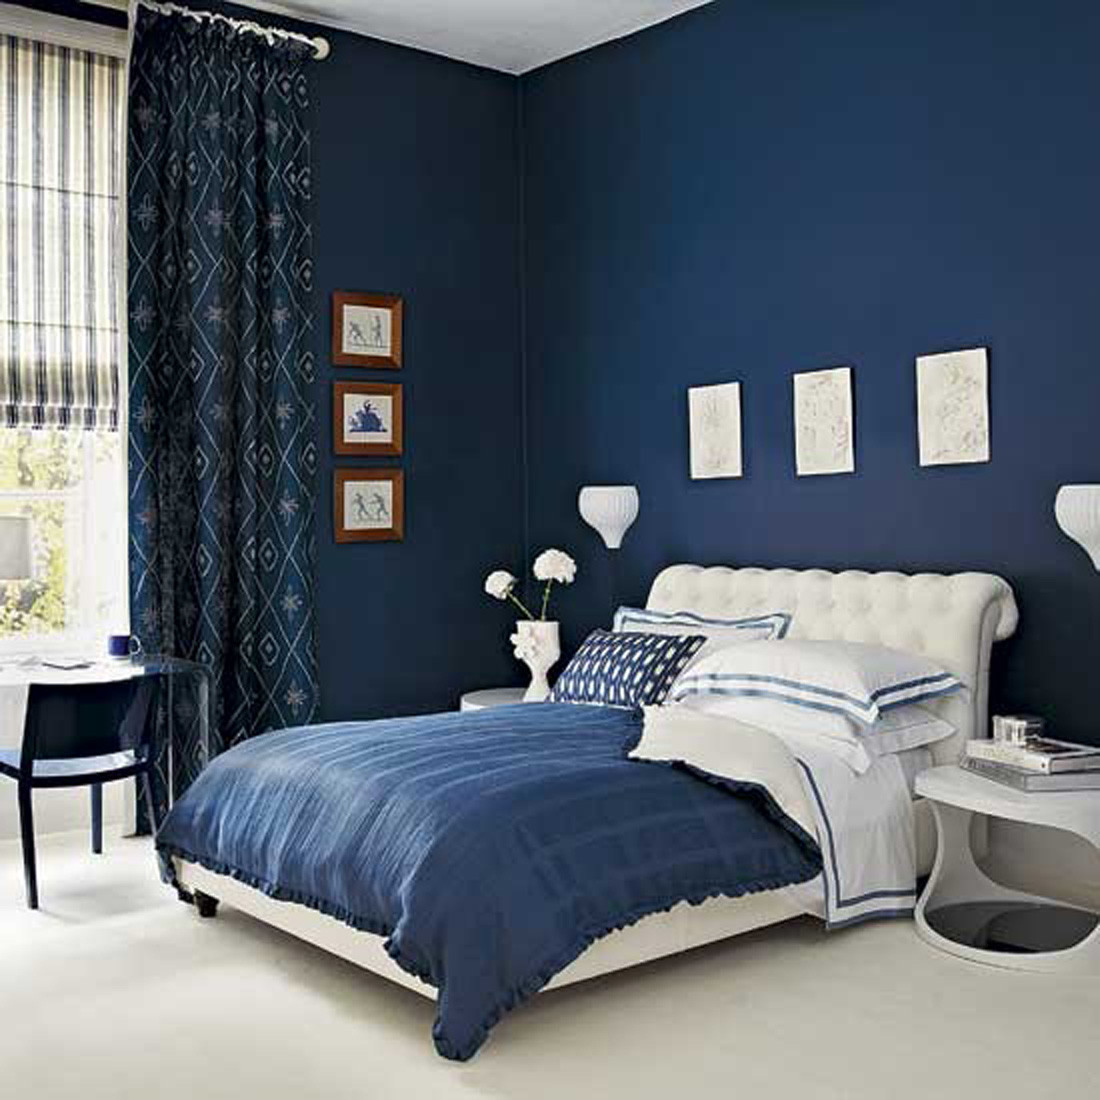 Bedroom Blue Walls
 15 Beautiful Dark Blue Wall Design Ideas